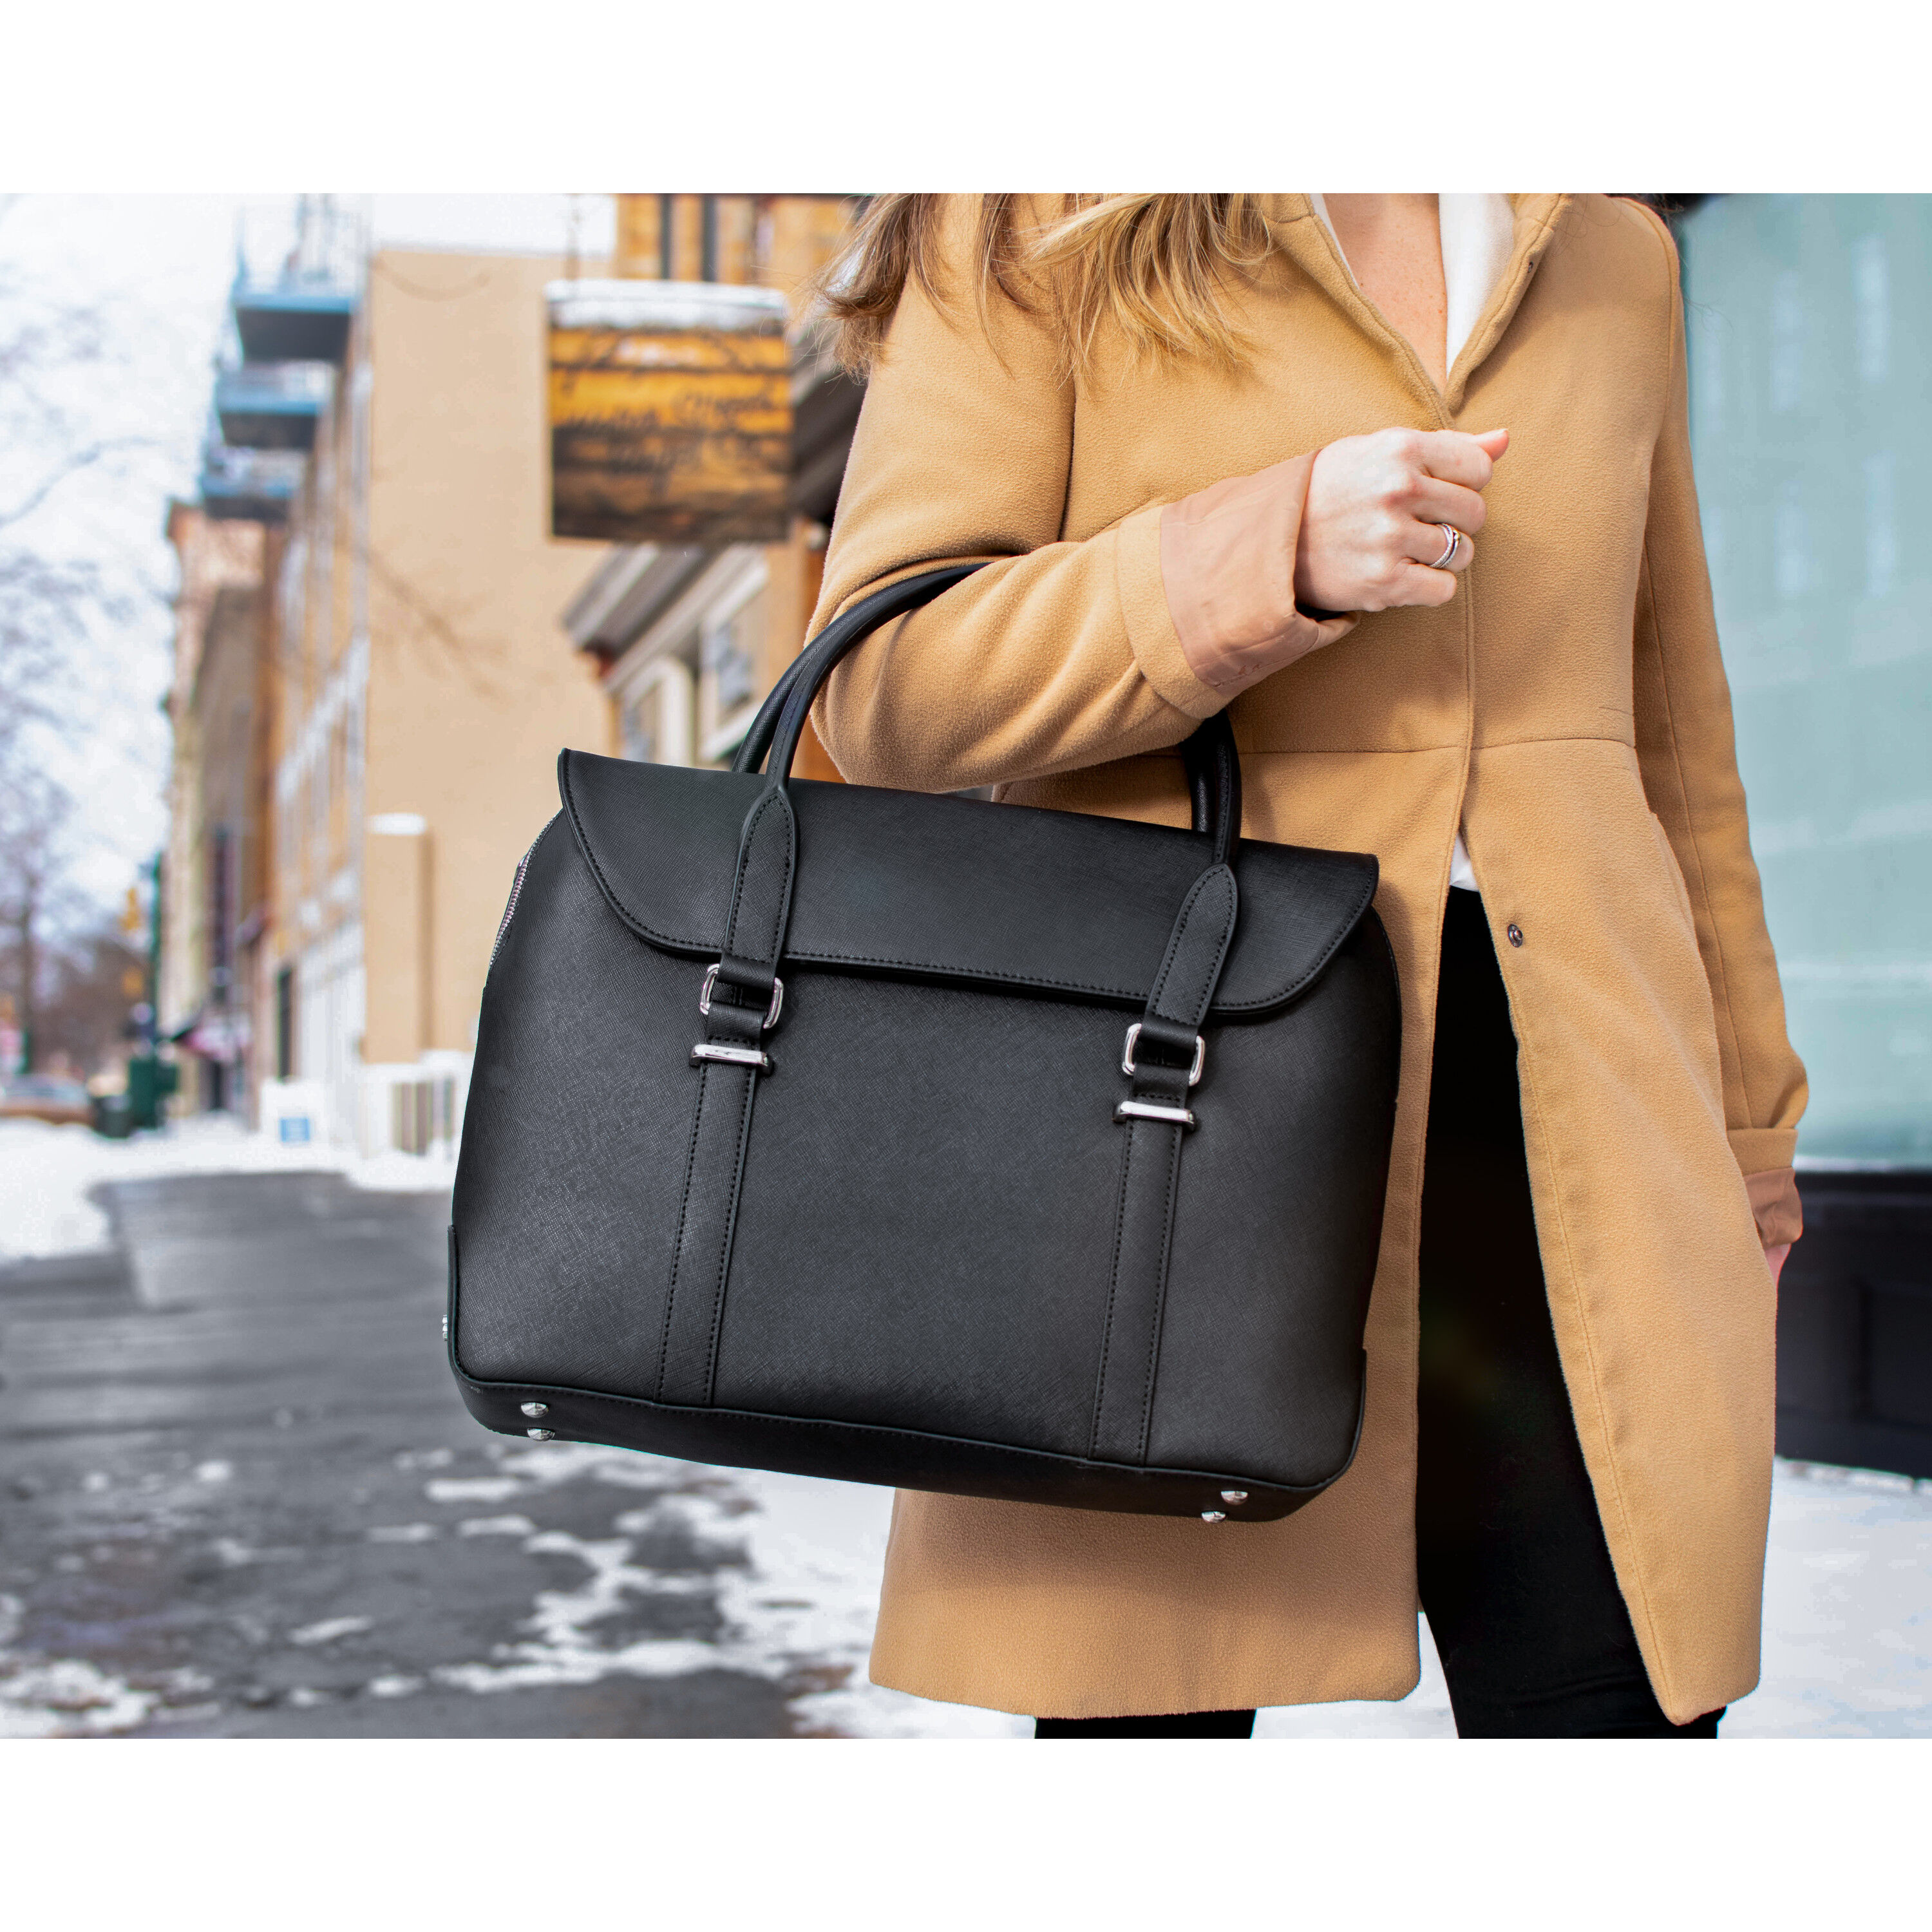 Samsonite Black Briefcase | Black briefcase, Leather briefcase, Samsonite